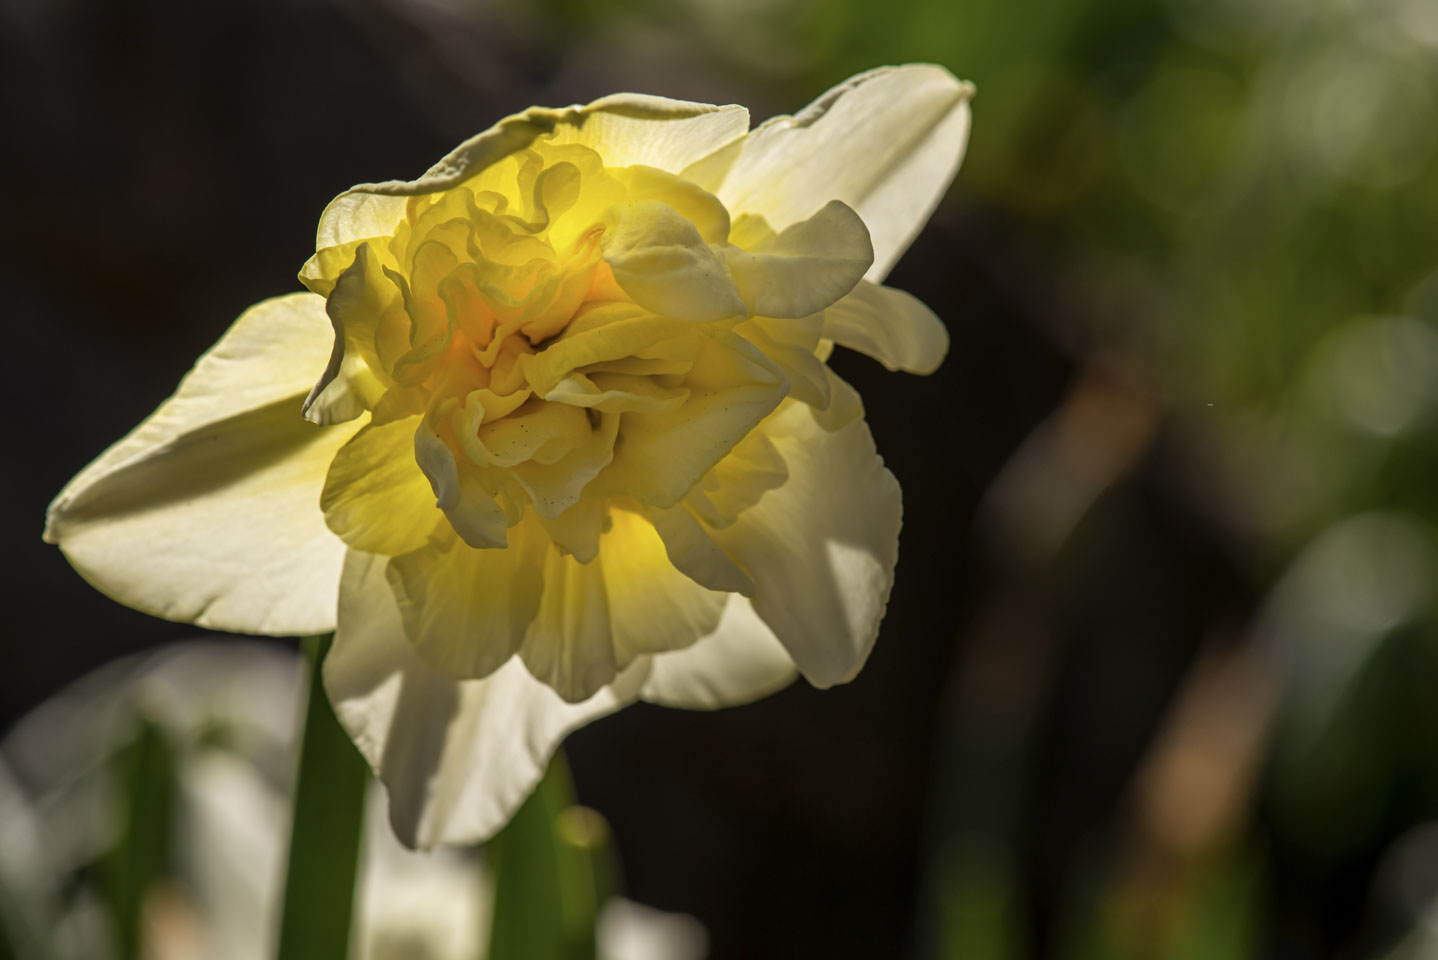 Daffodil with sunlight shining through petals